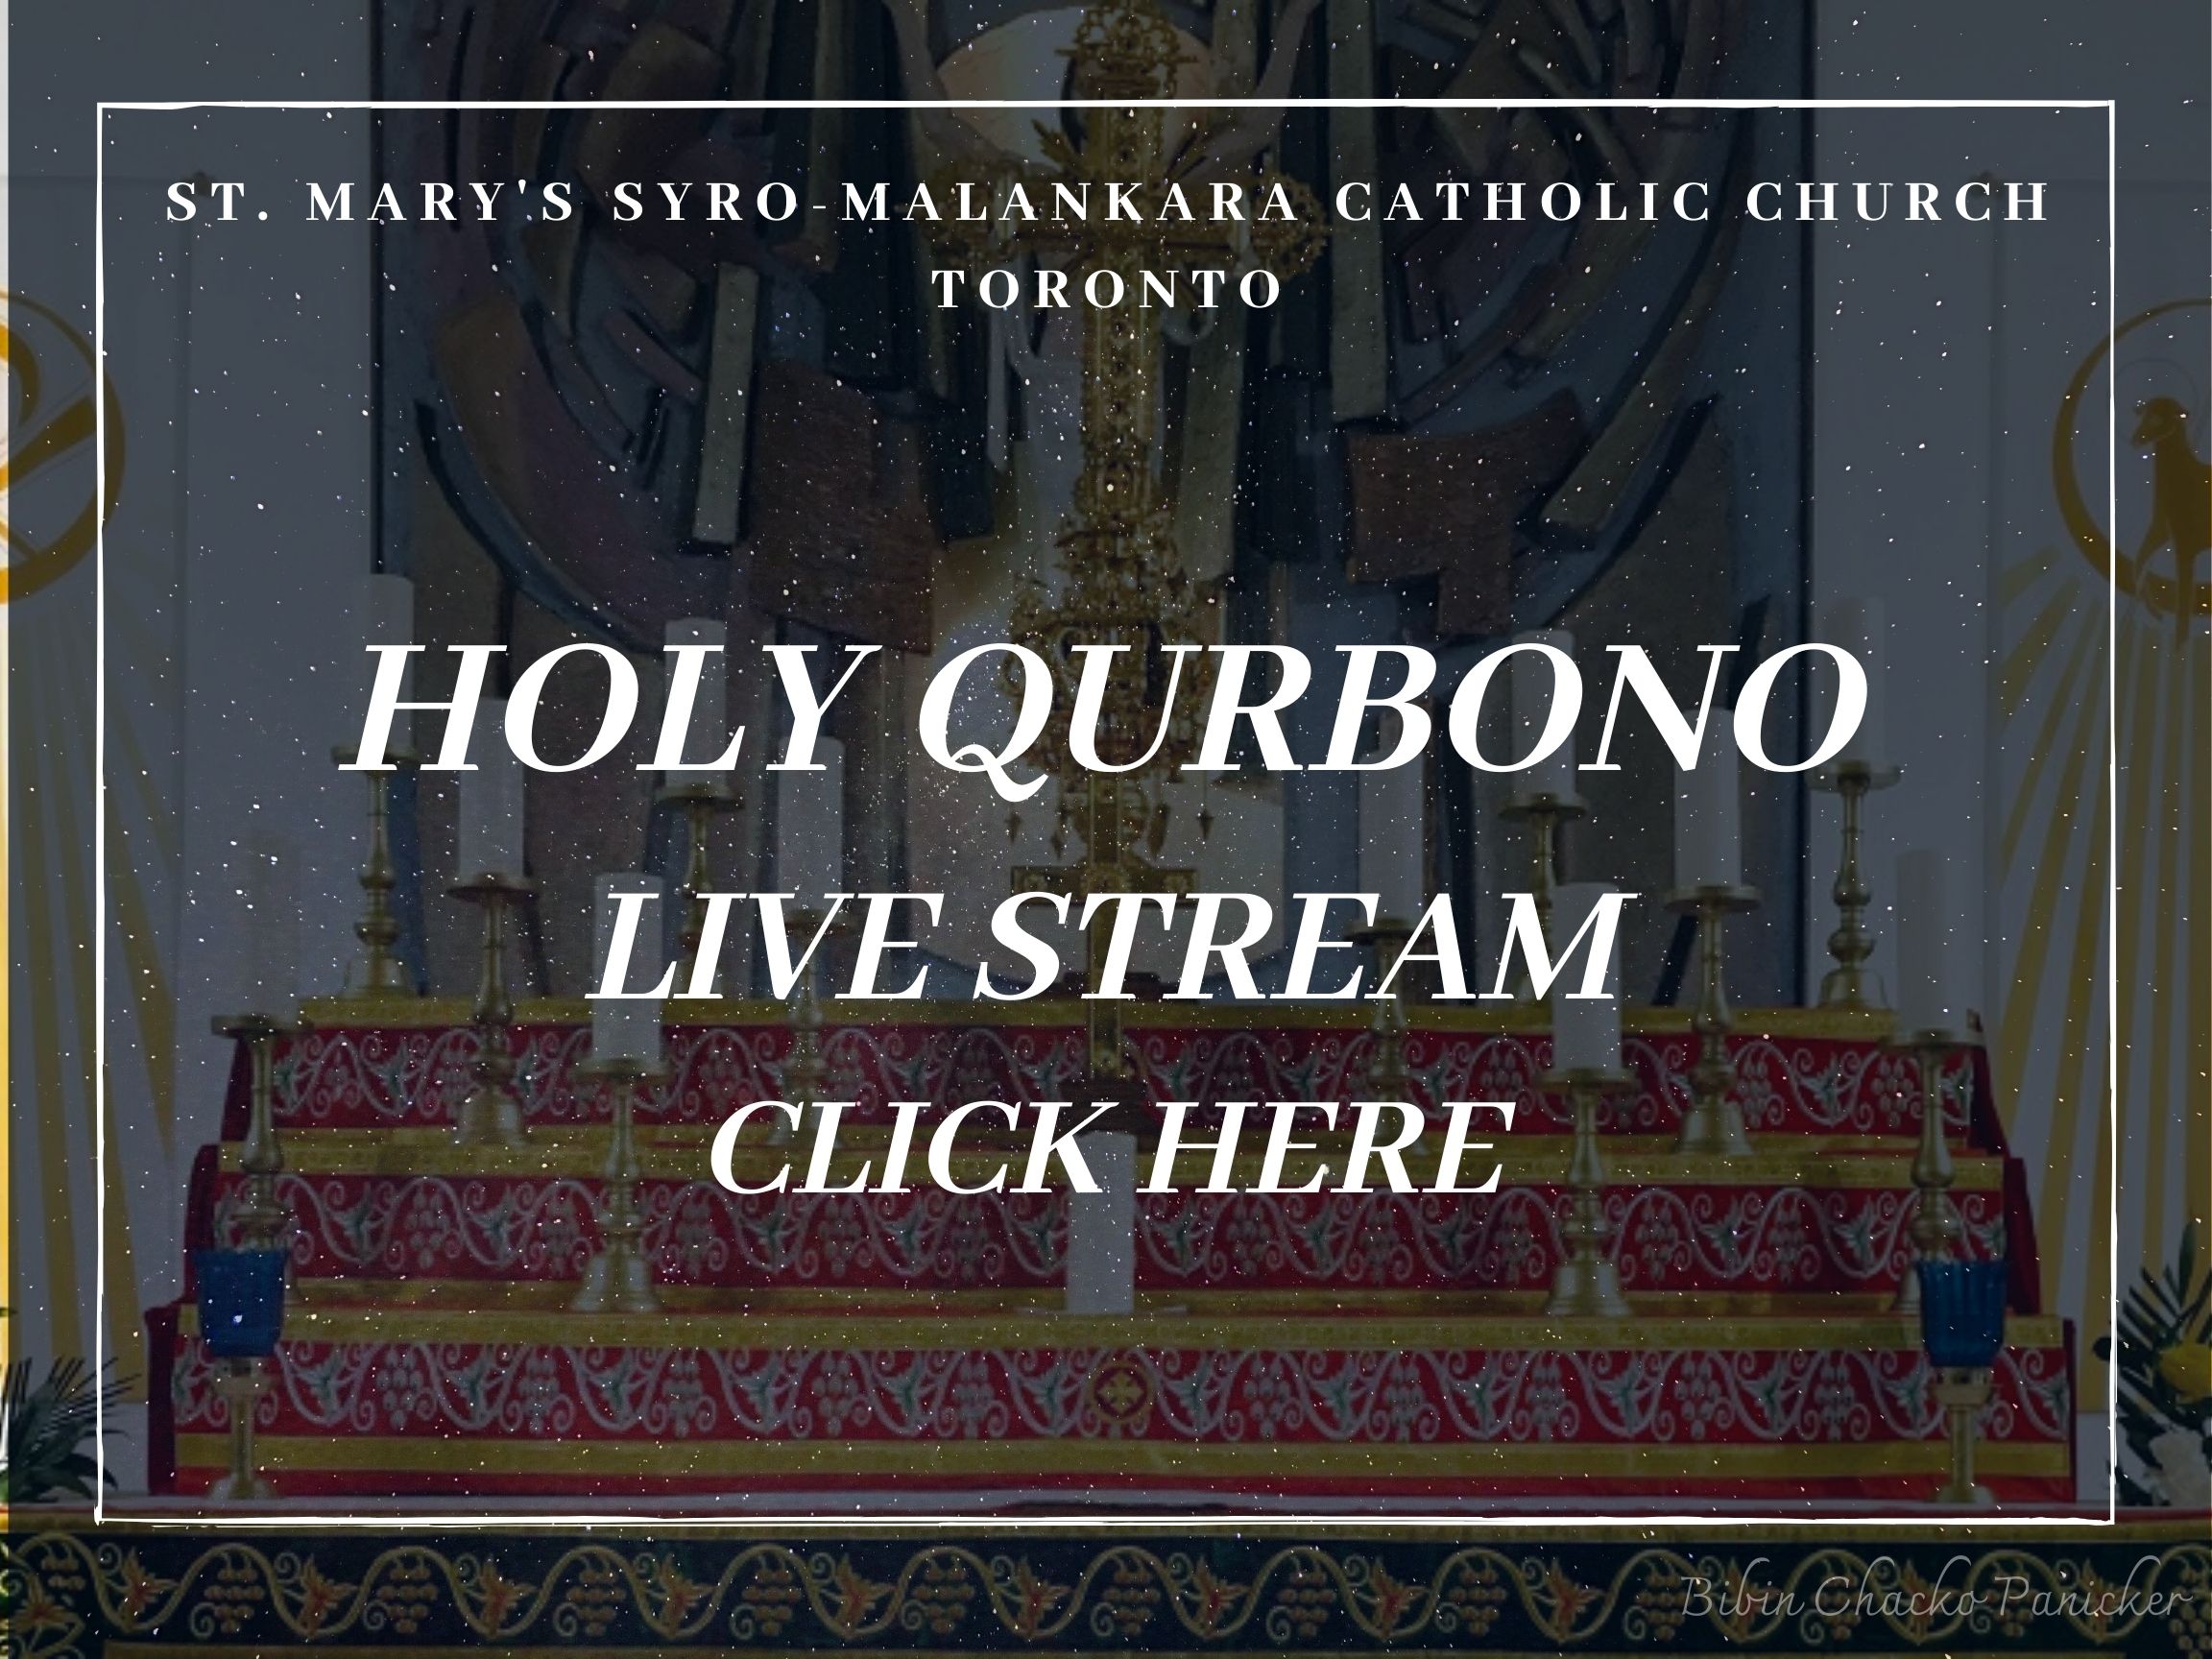 Holy Qurbono Live Stream - St Marys' Syro-Malankara Catholic Church, Toronto